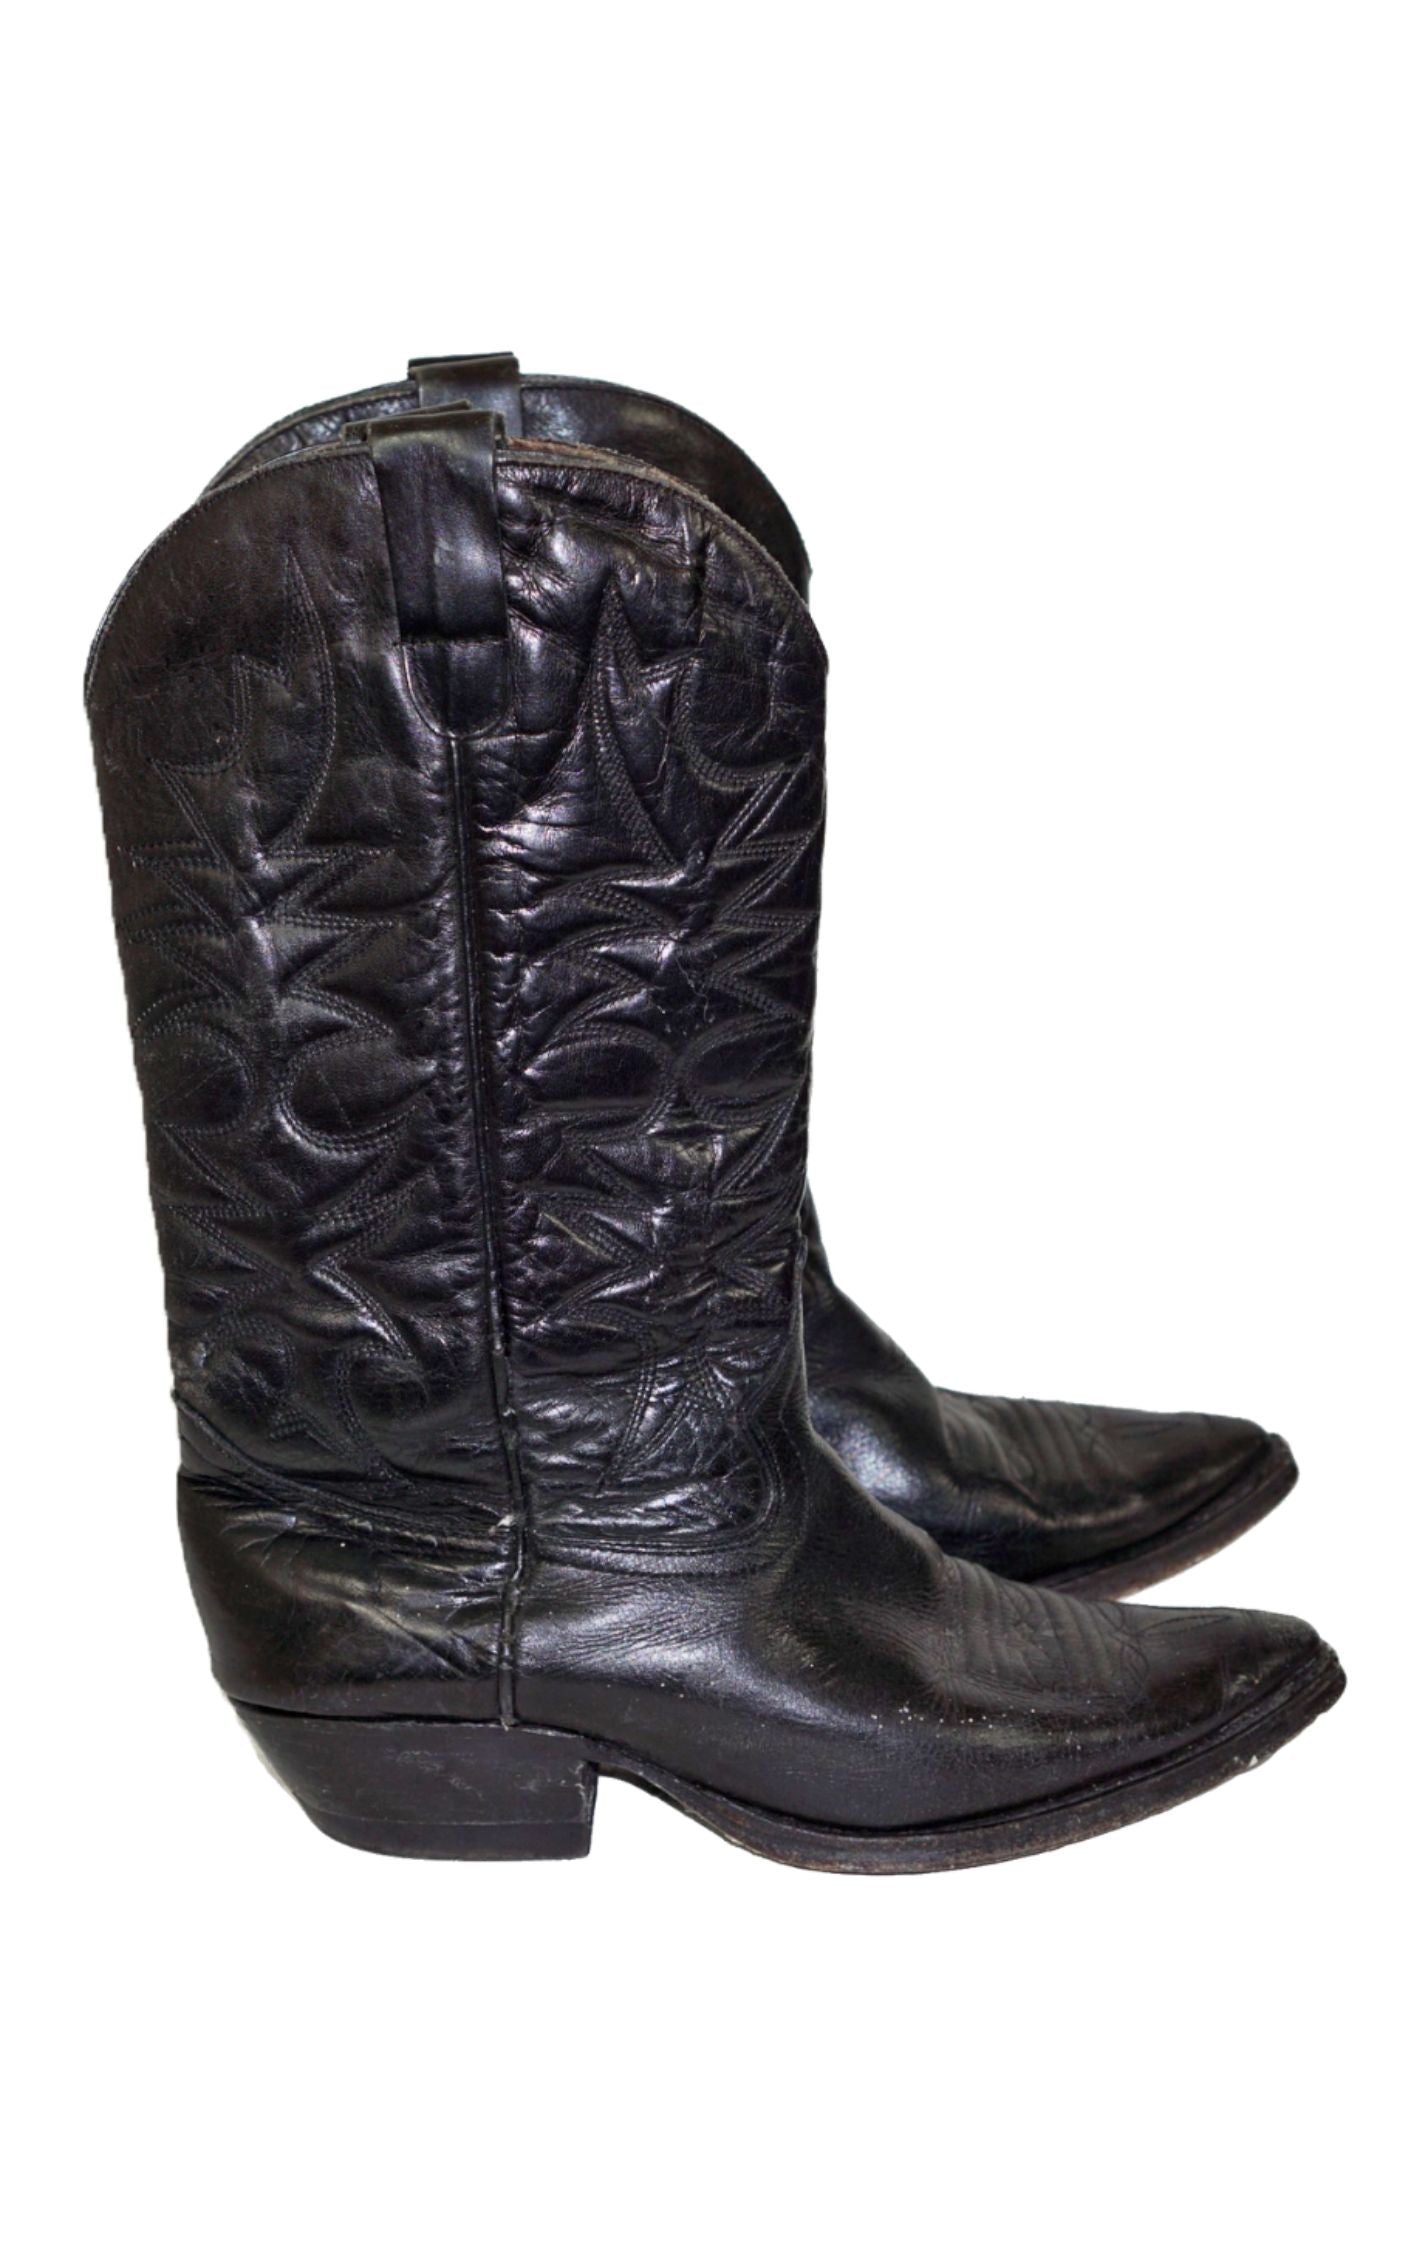 VINTAGE Black Leather Western Cowboy Boots resellum